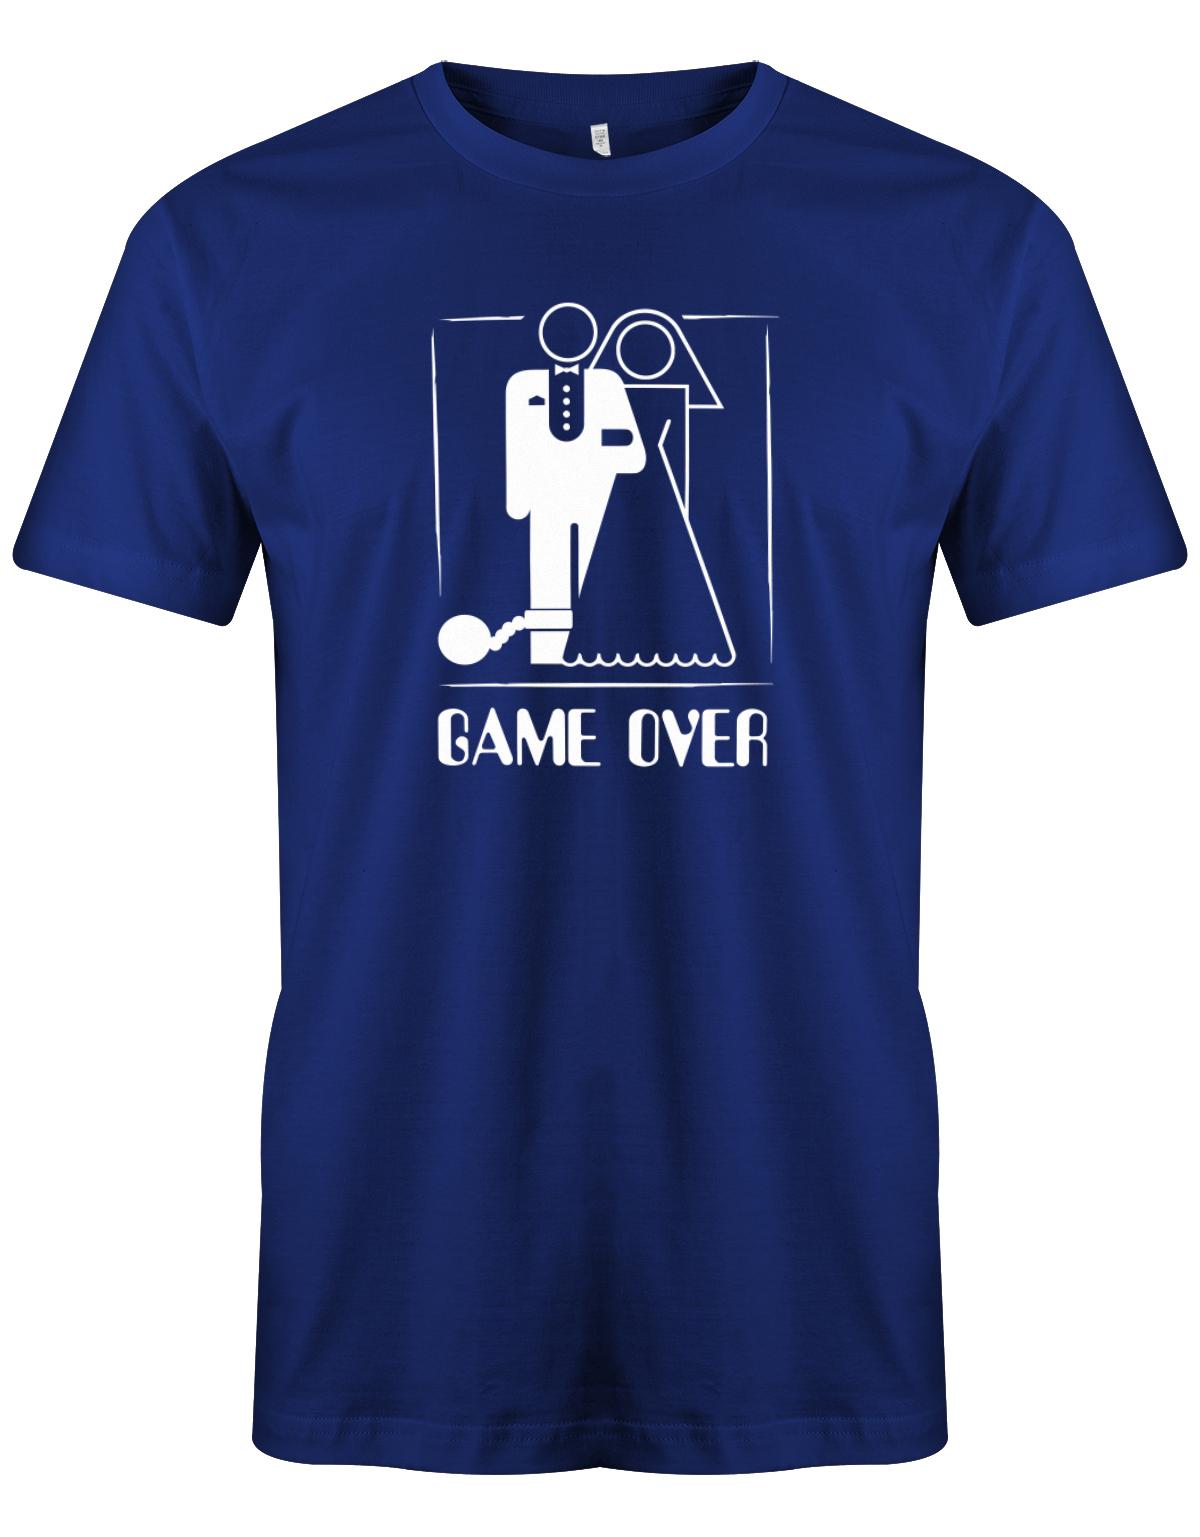 Game-Over-Fussfessel-Herren-JGA-Shirt-RoyalblauDvwWKy8x9jNlS